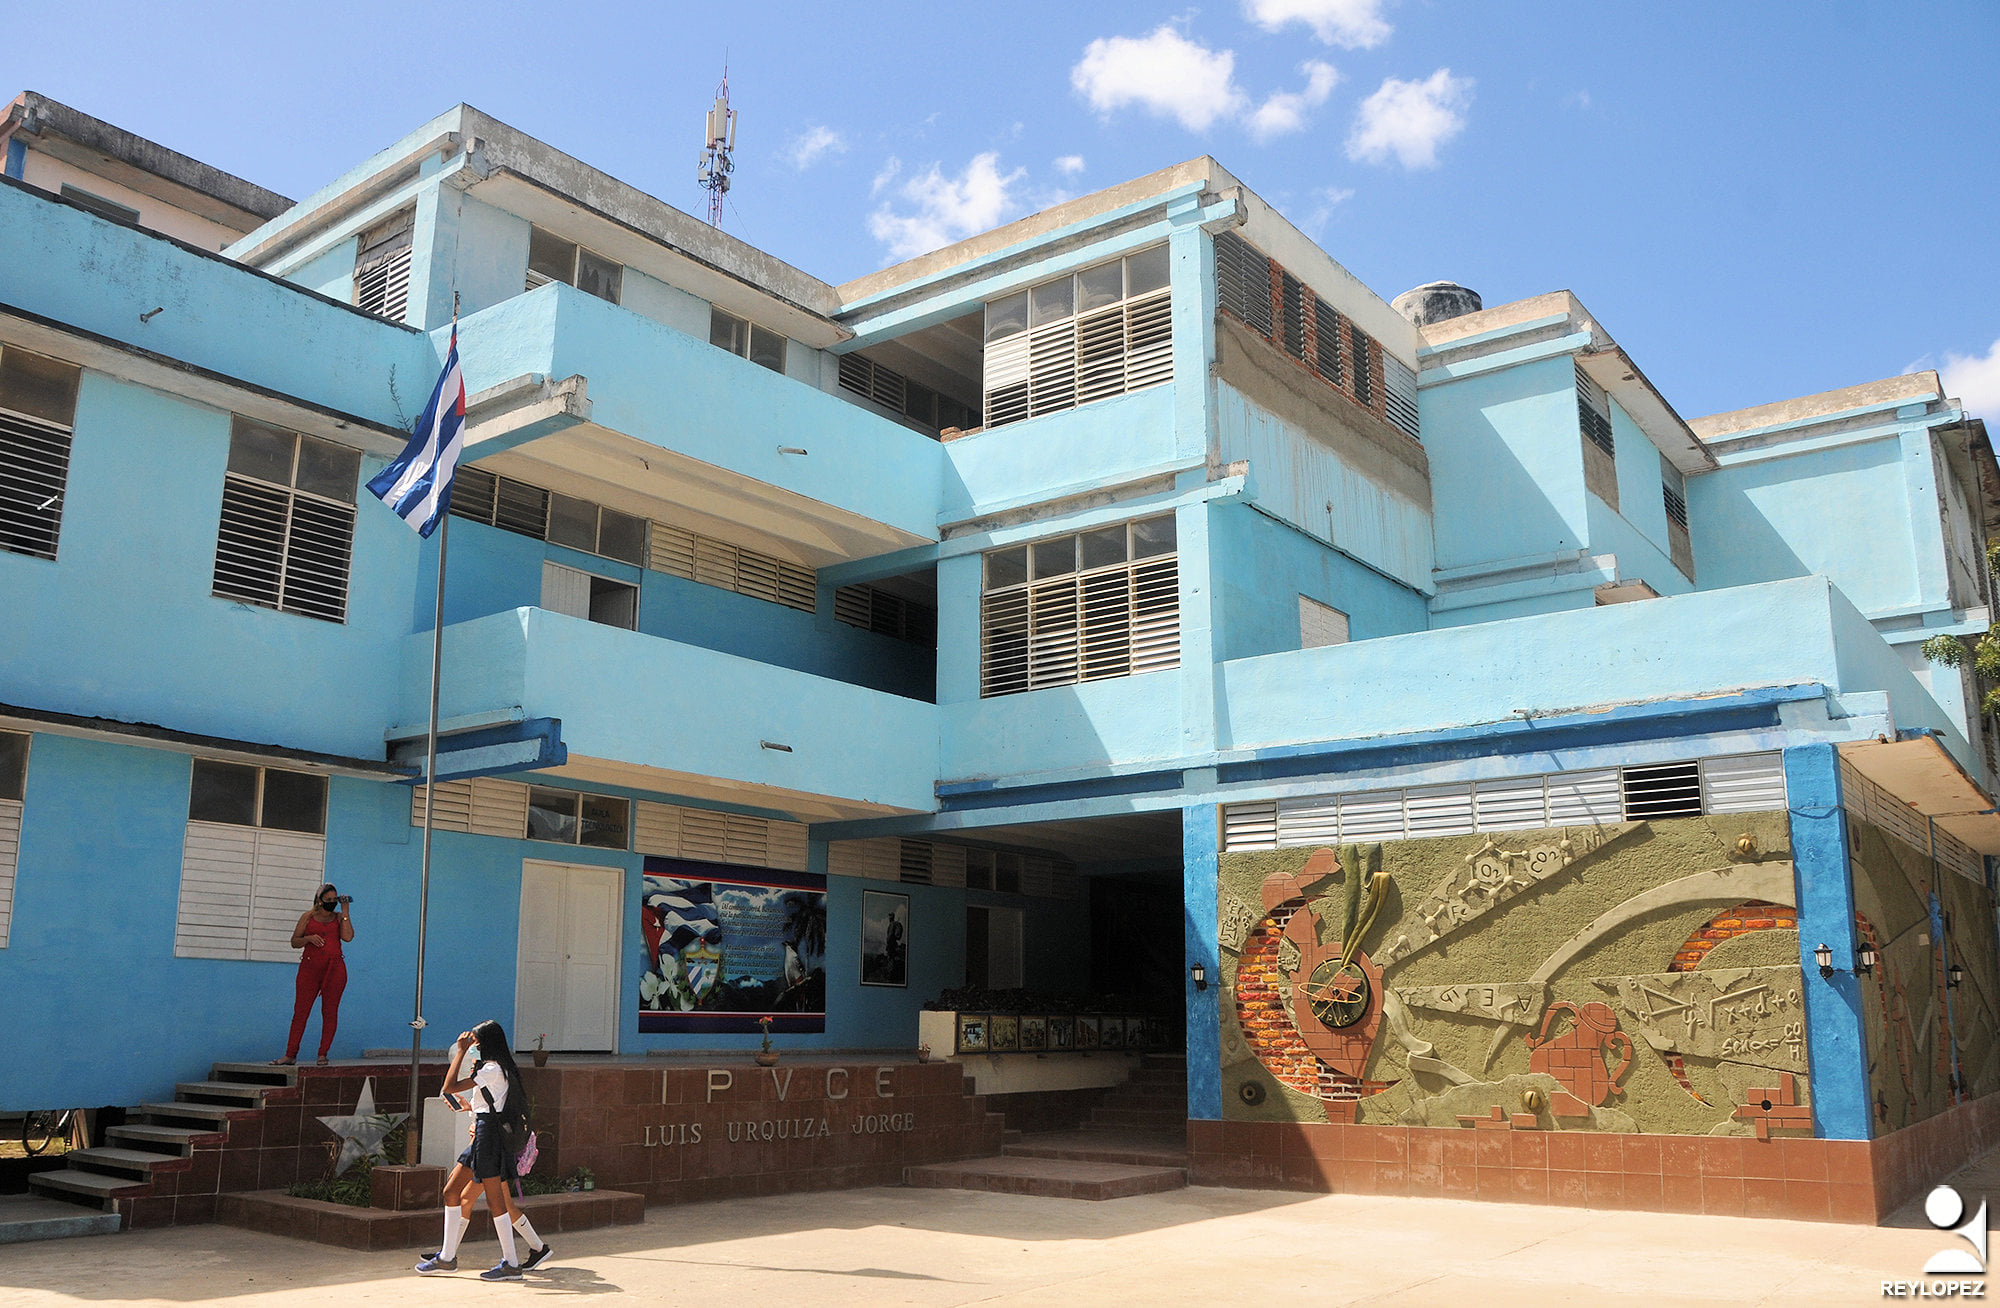 The "Luis Urquiza," a flagship of pre-university education in Las Tunas